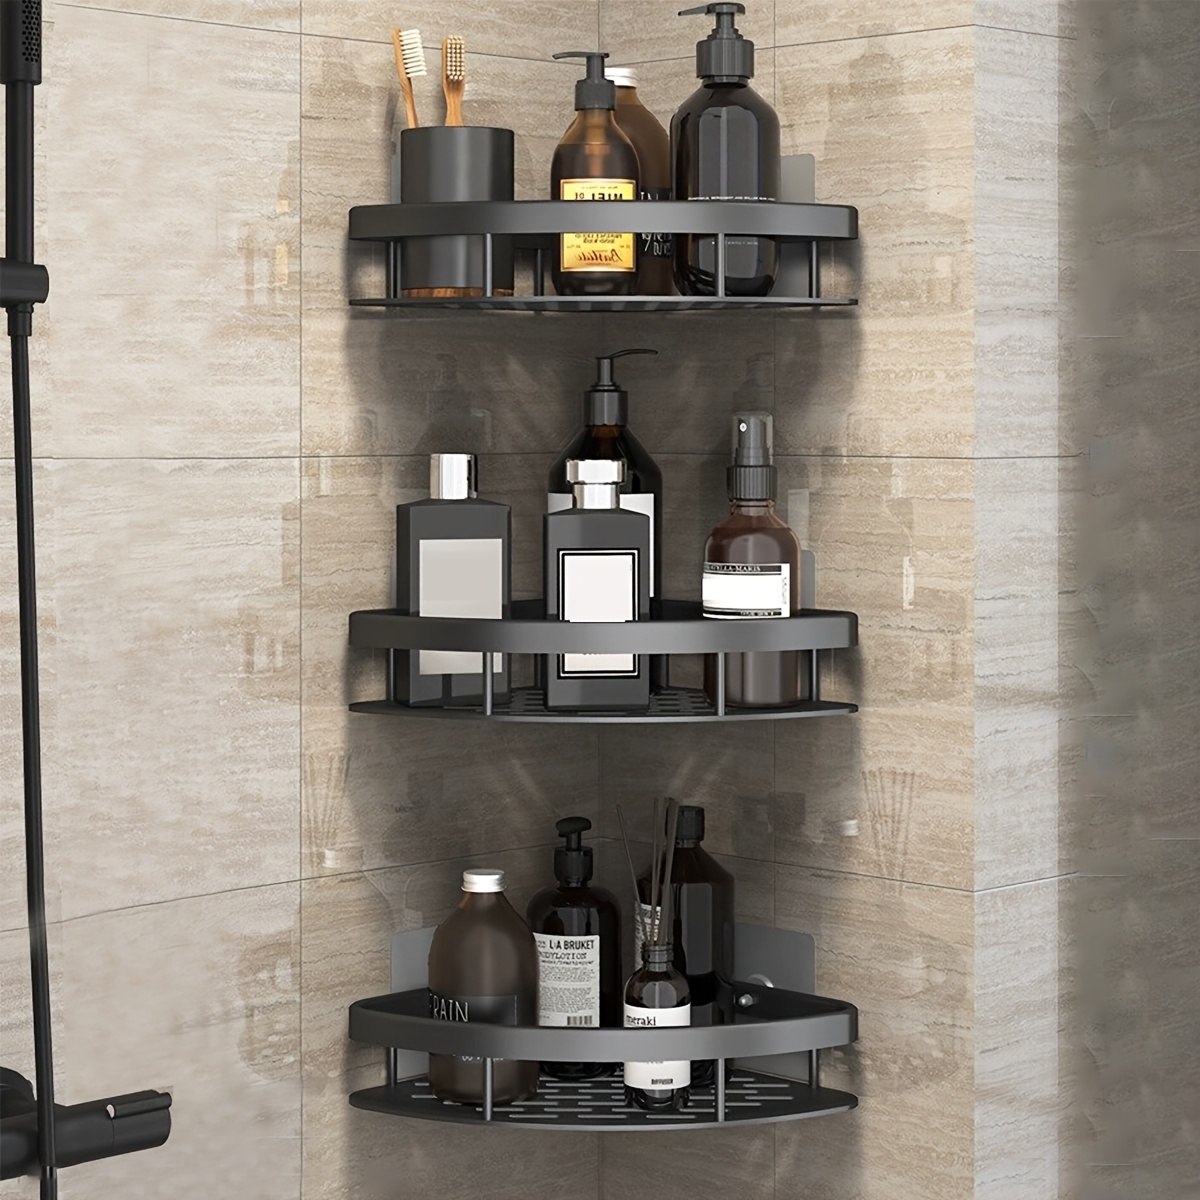 Laigoo Adhesive Shower Caddy Corner Shelf, Metal Bathroom Shelf Wall Mounted Shower Shelf, Non-Drilling Floating Shelves for Shower Organizer